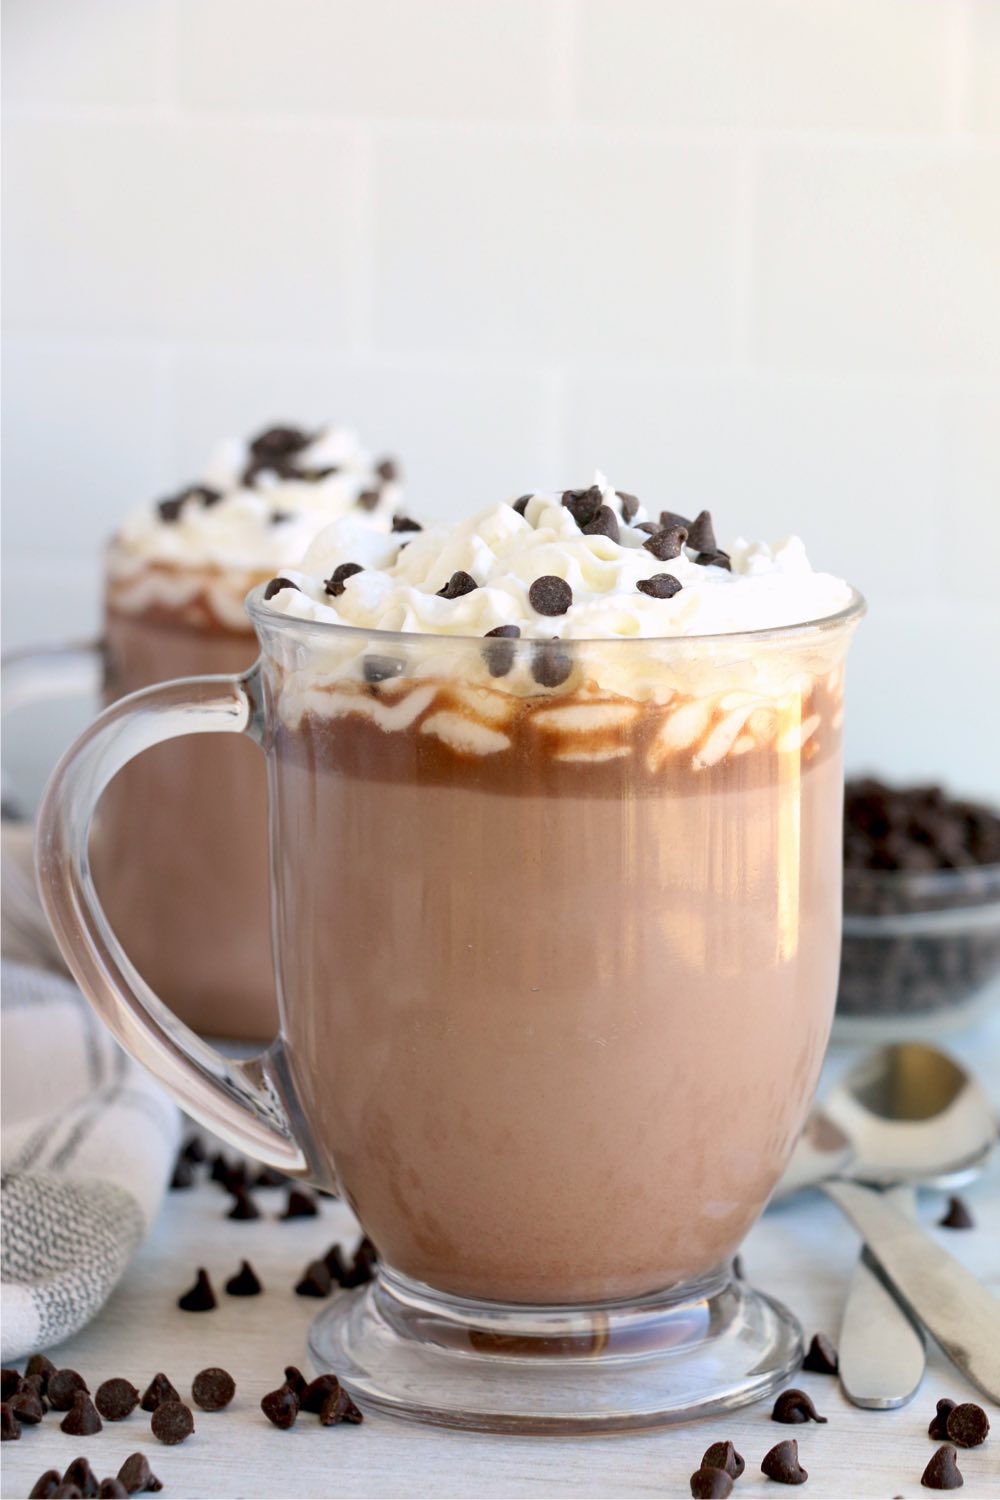 glass mug of hot chocolate with cream and chocolate chips